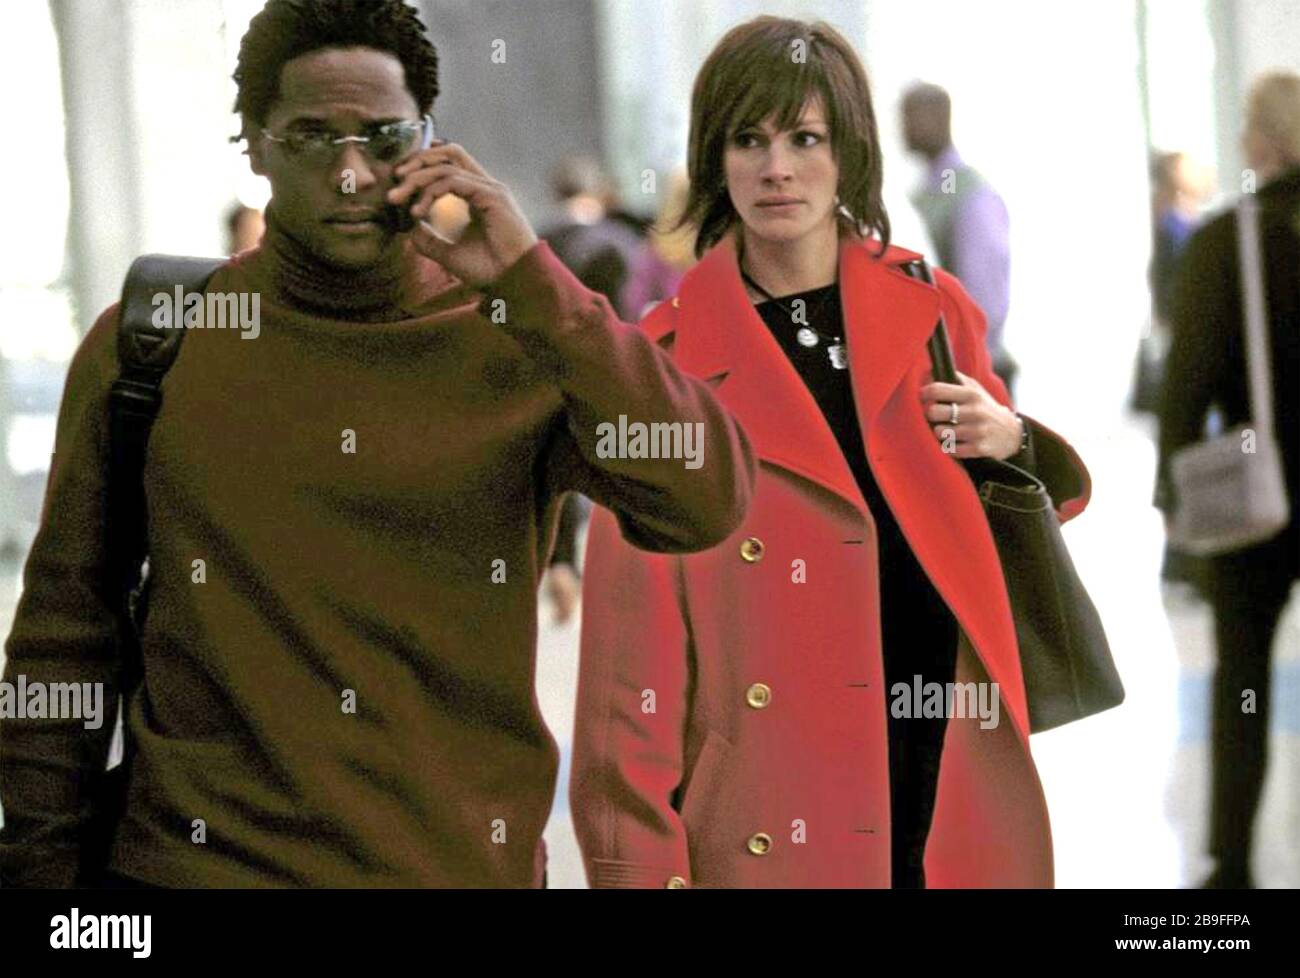 FULL FRONTALE 2002 Miramax film con Blair Underwood a sinistra e Julia Roberts, Foto Stock